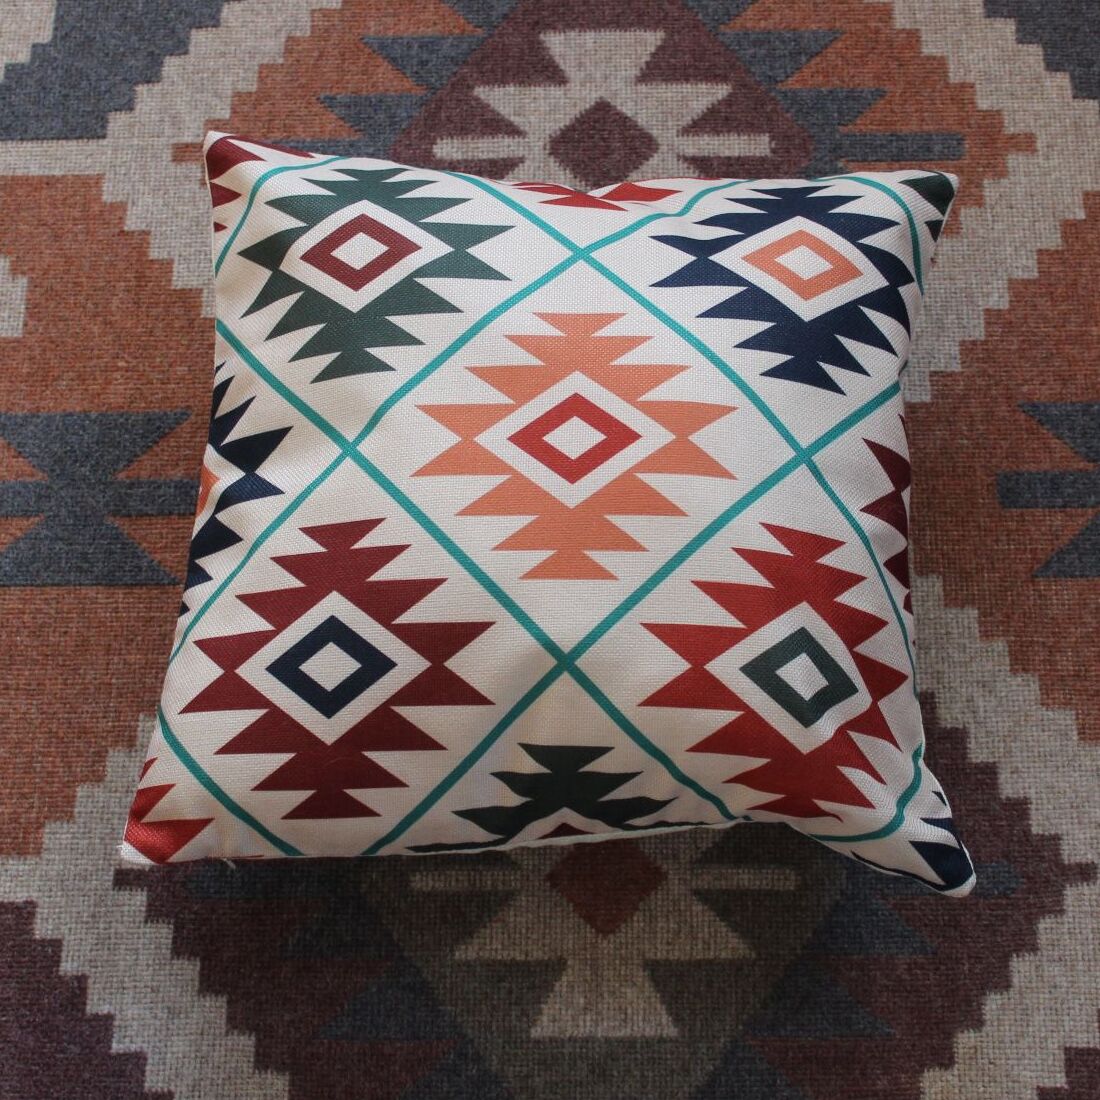 Rustic olmec cushion cover southwestern native pattern